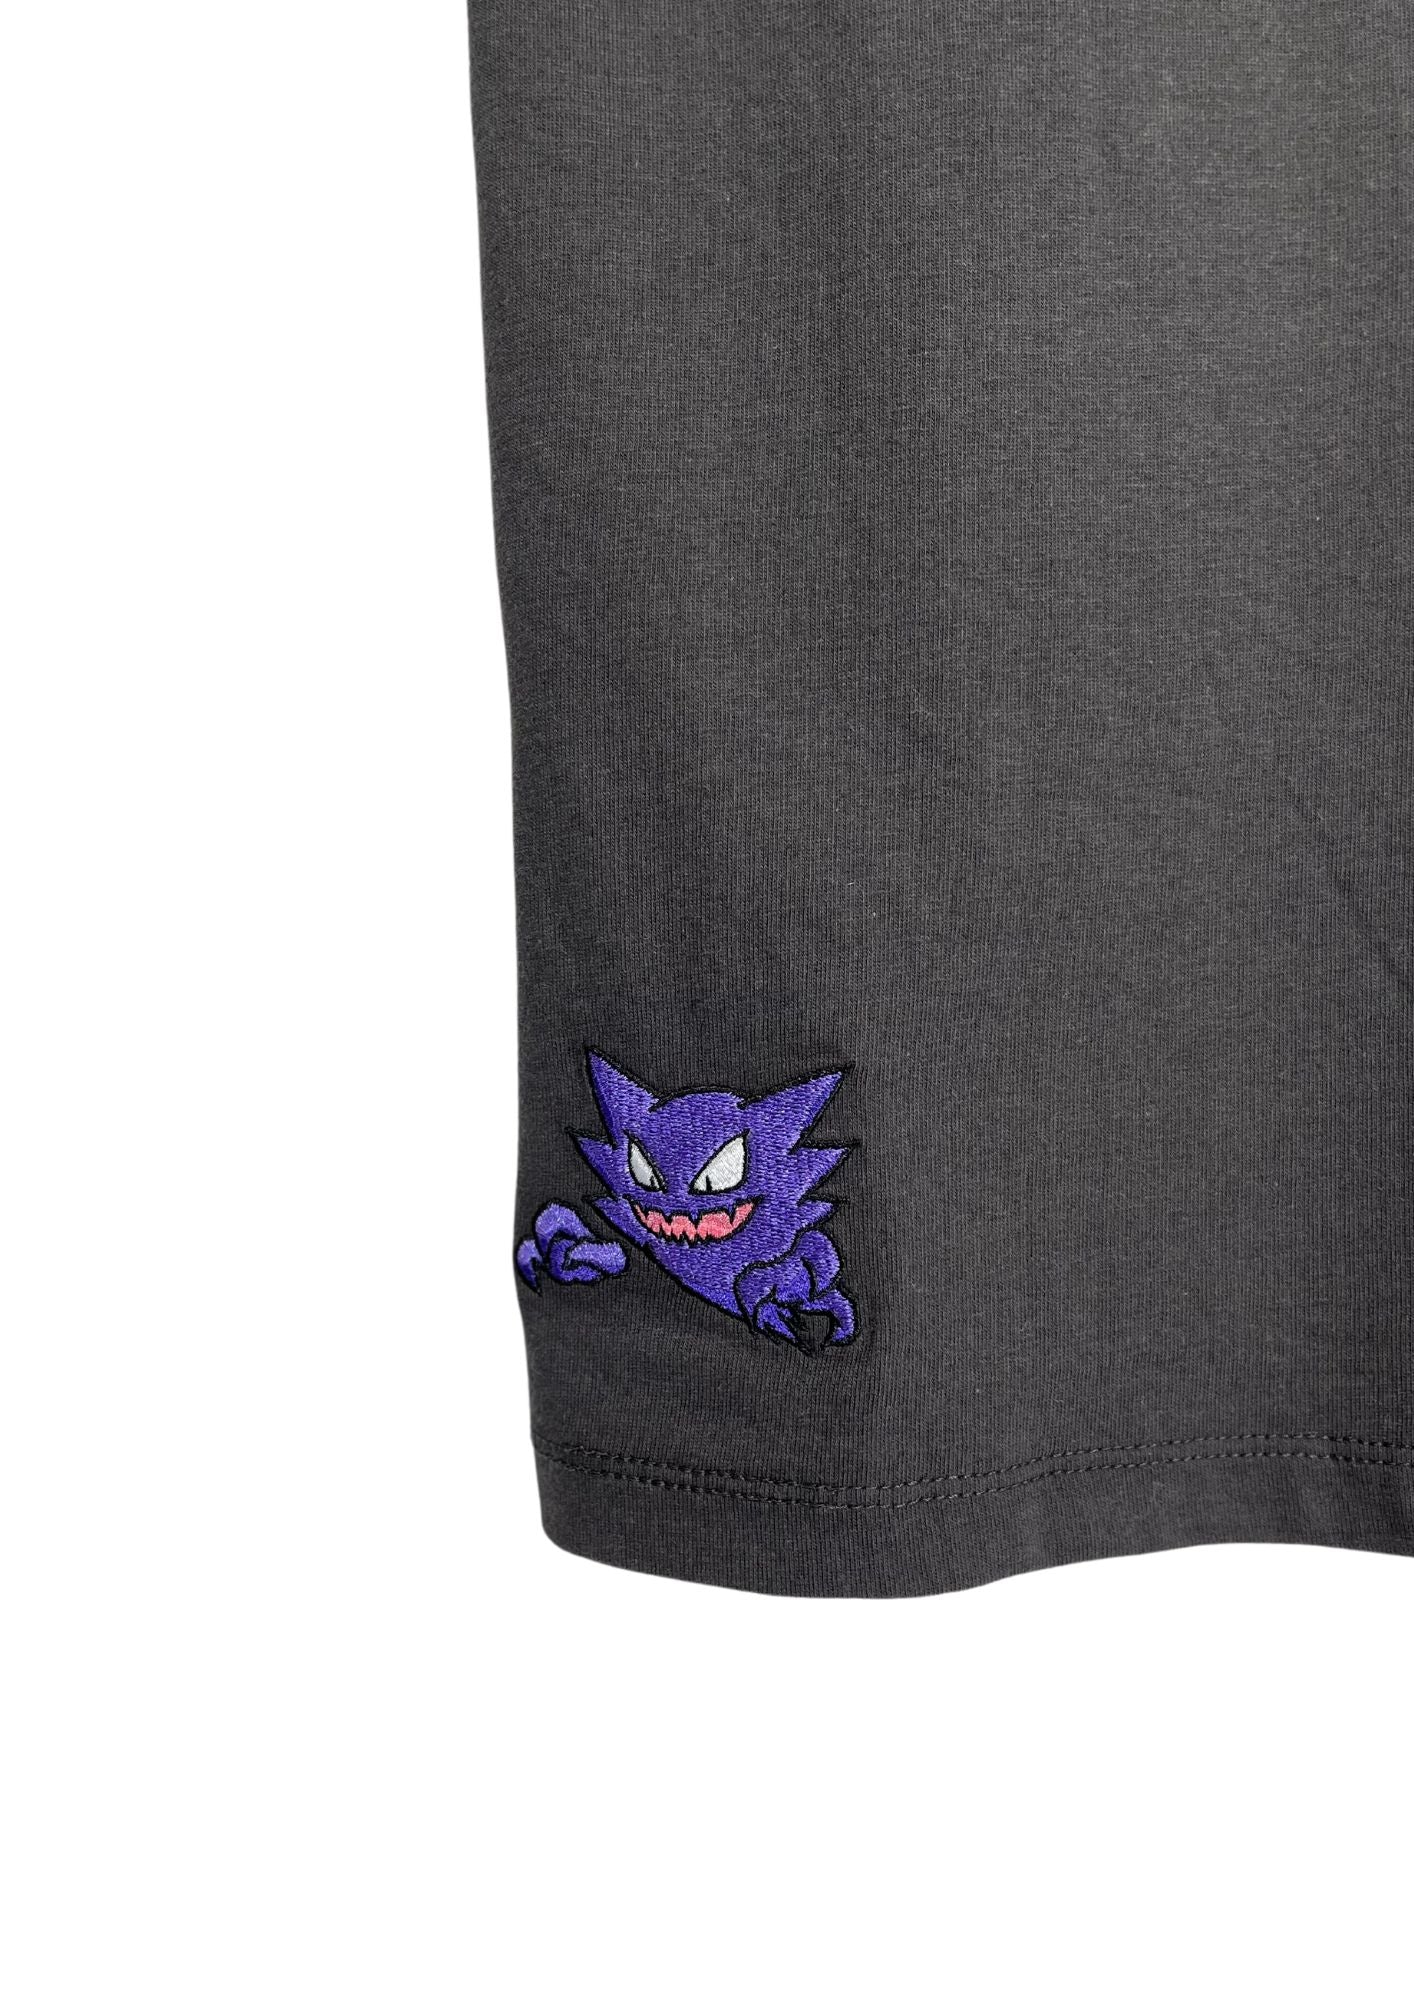 Pokemon x Graniph Embroidered Ganger T-shirt